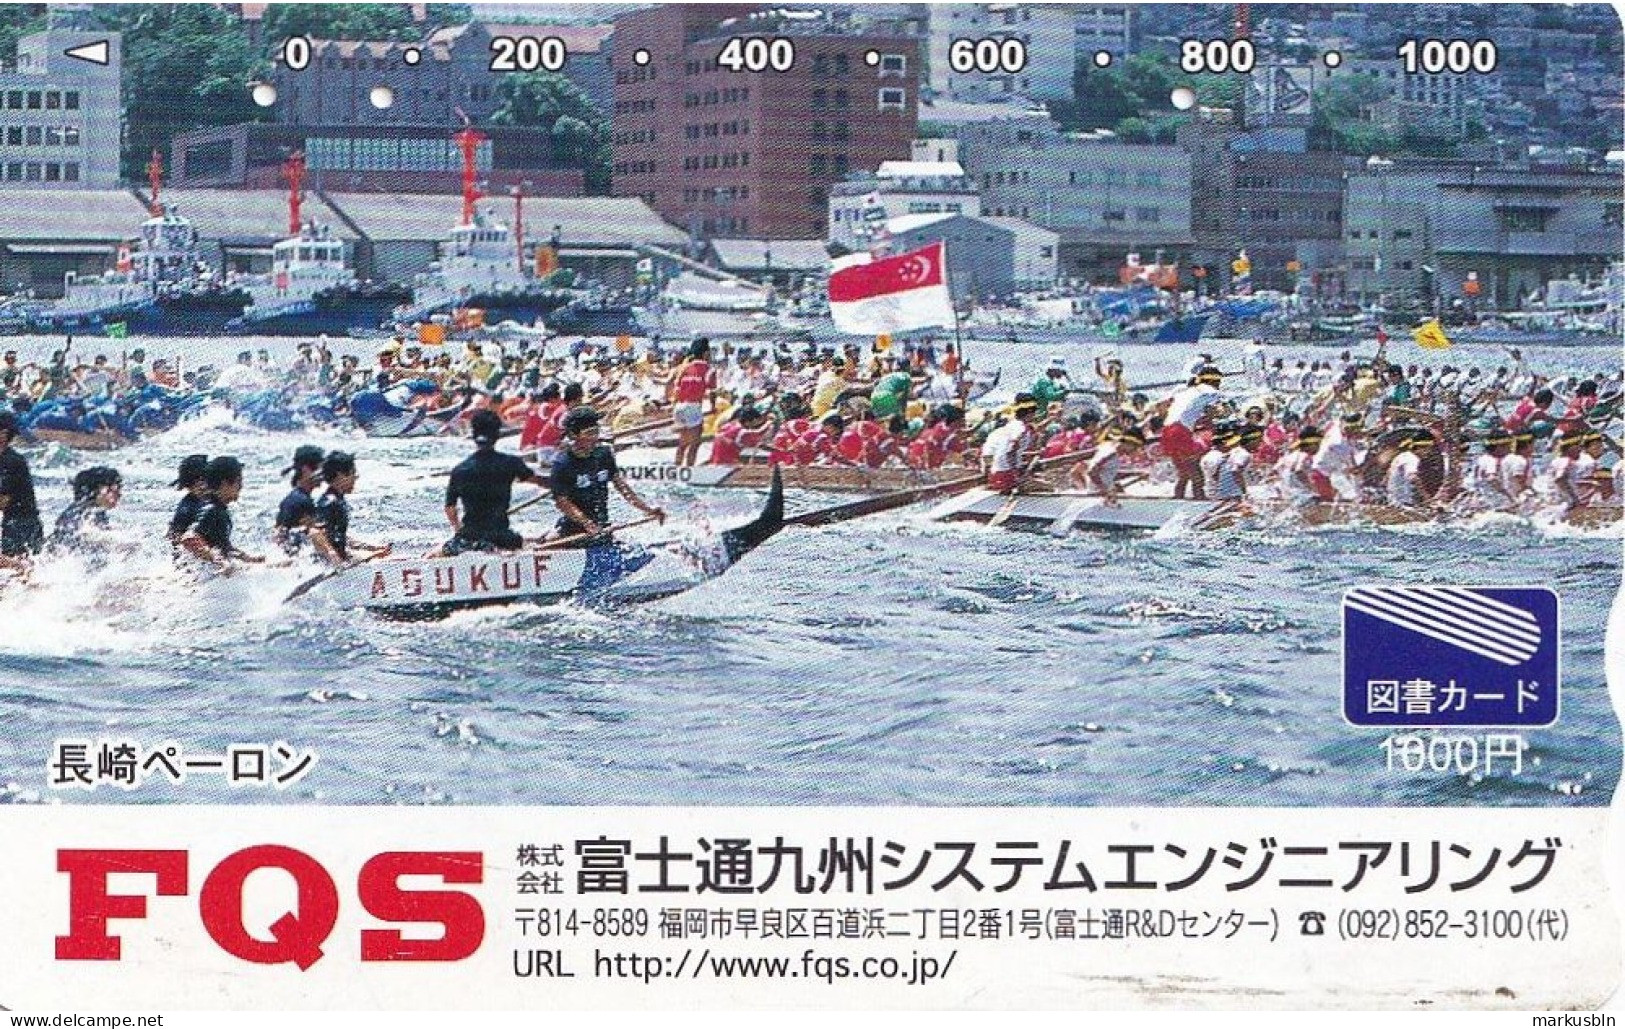 Japan Prepaid Library Card 1000 - Singapore Flag Dragon Boat Competition Nagasaki Peron - Japan